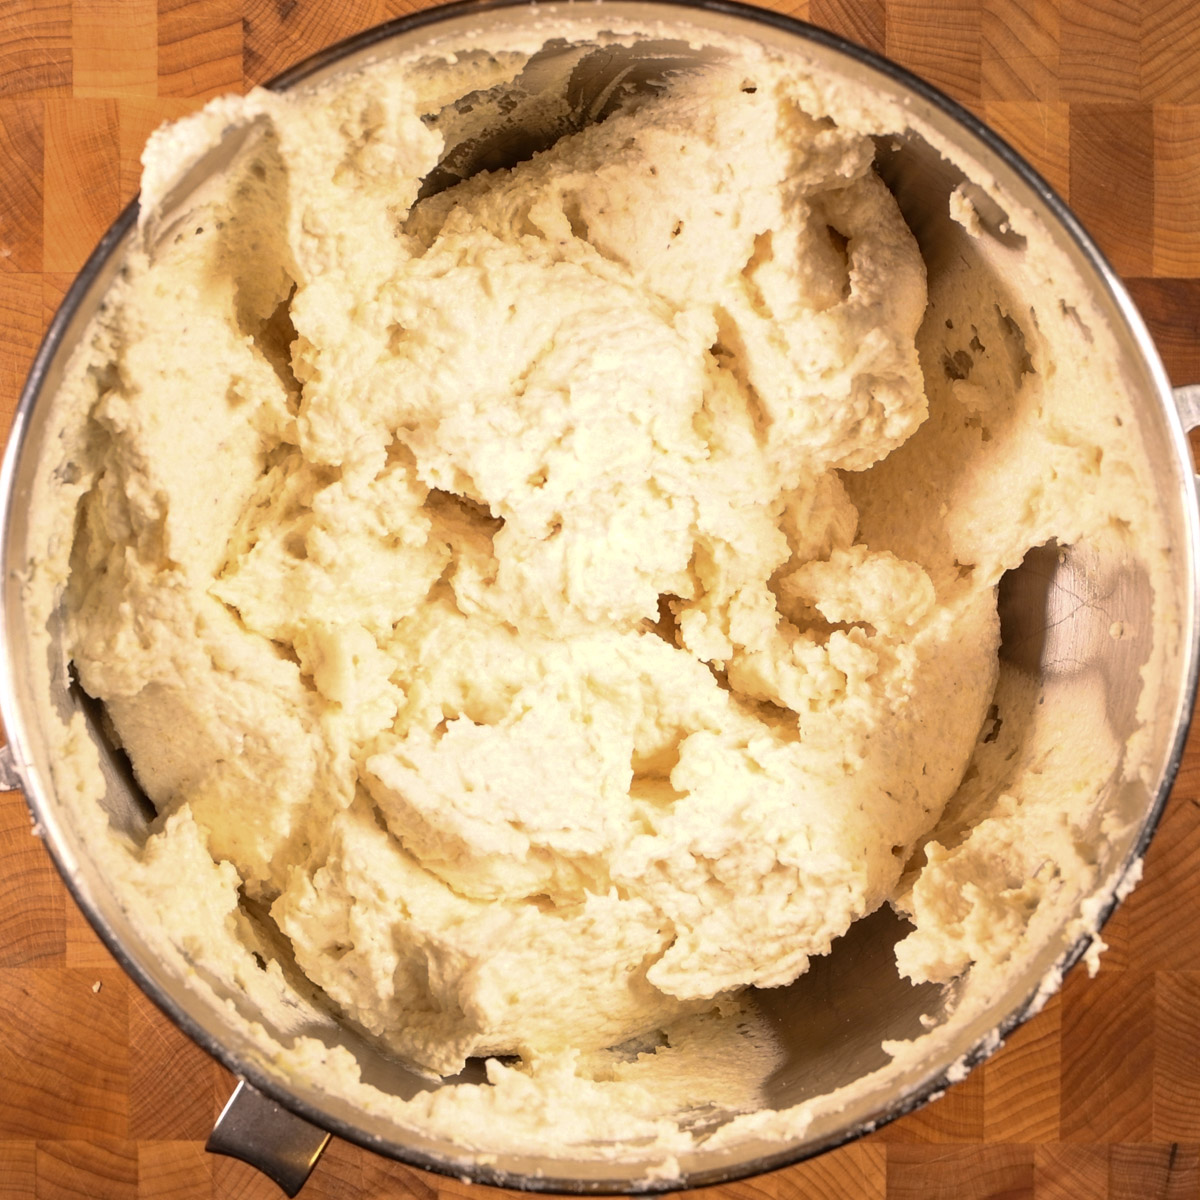 Make the masa dough in a stand mixer.